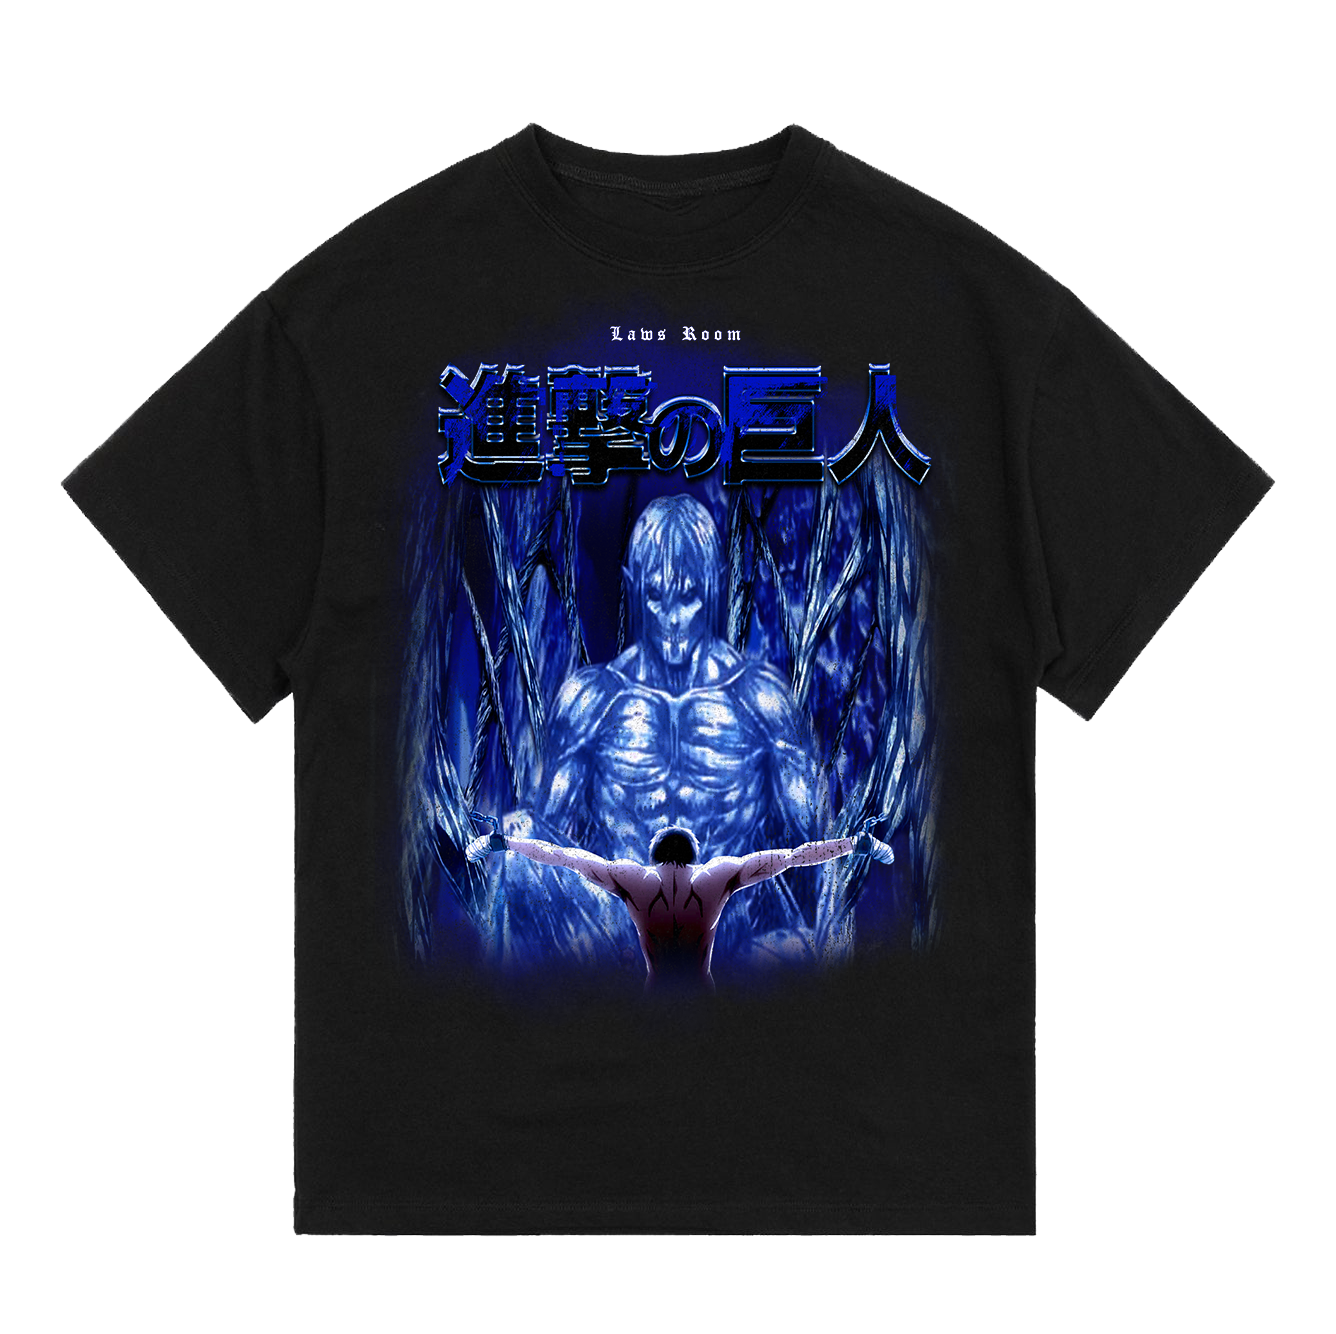 "Chained Eren" - Oversized Heavy T-Shirt